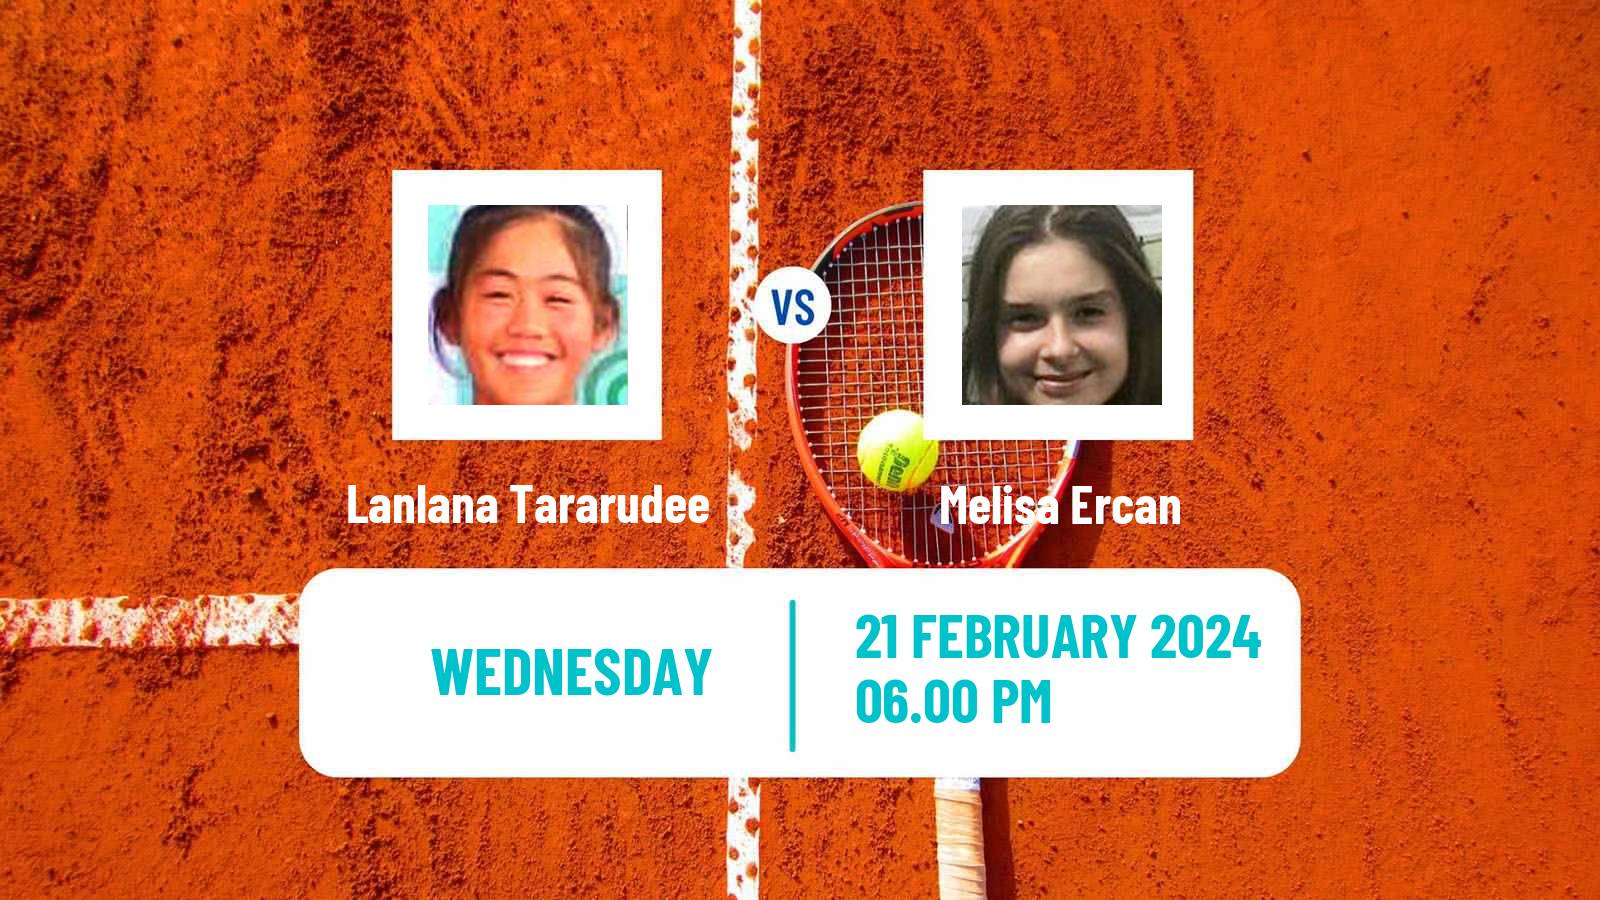 Tennis ITF W35 Traralgon Women Lanlana Tararudee - Melisa Ercan